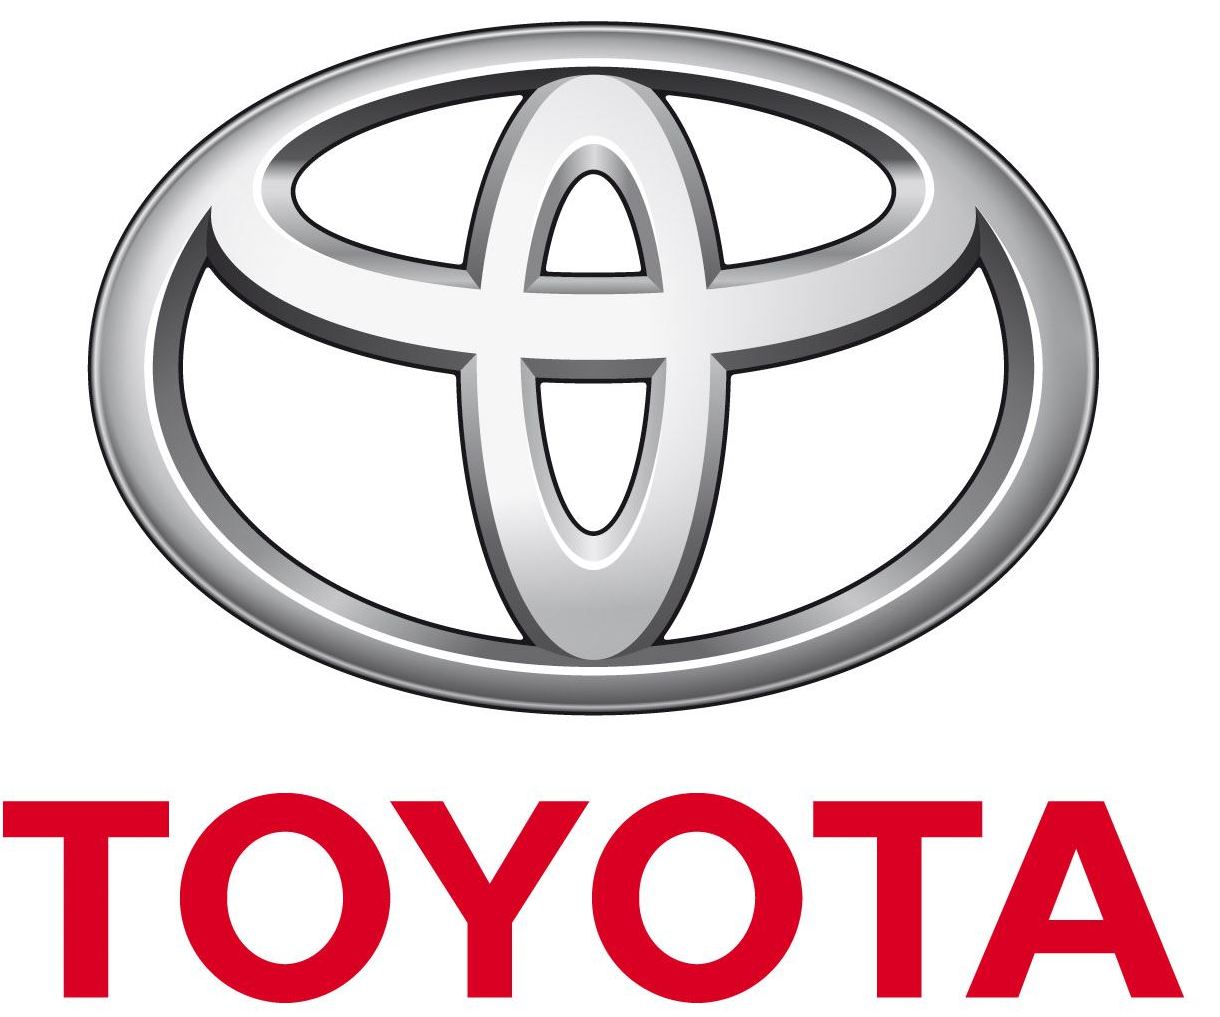 Toyota-logo-4.jpg